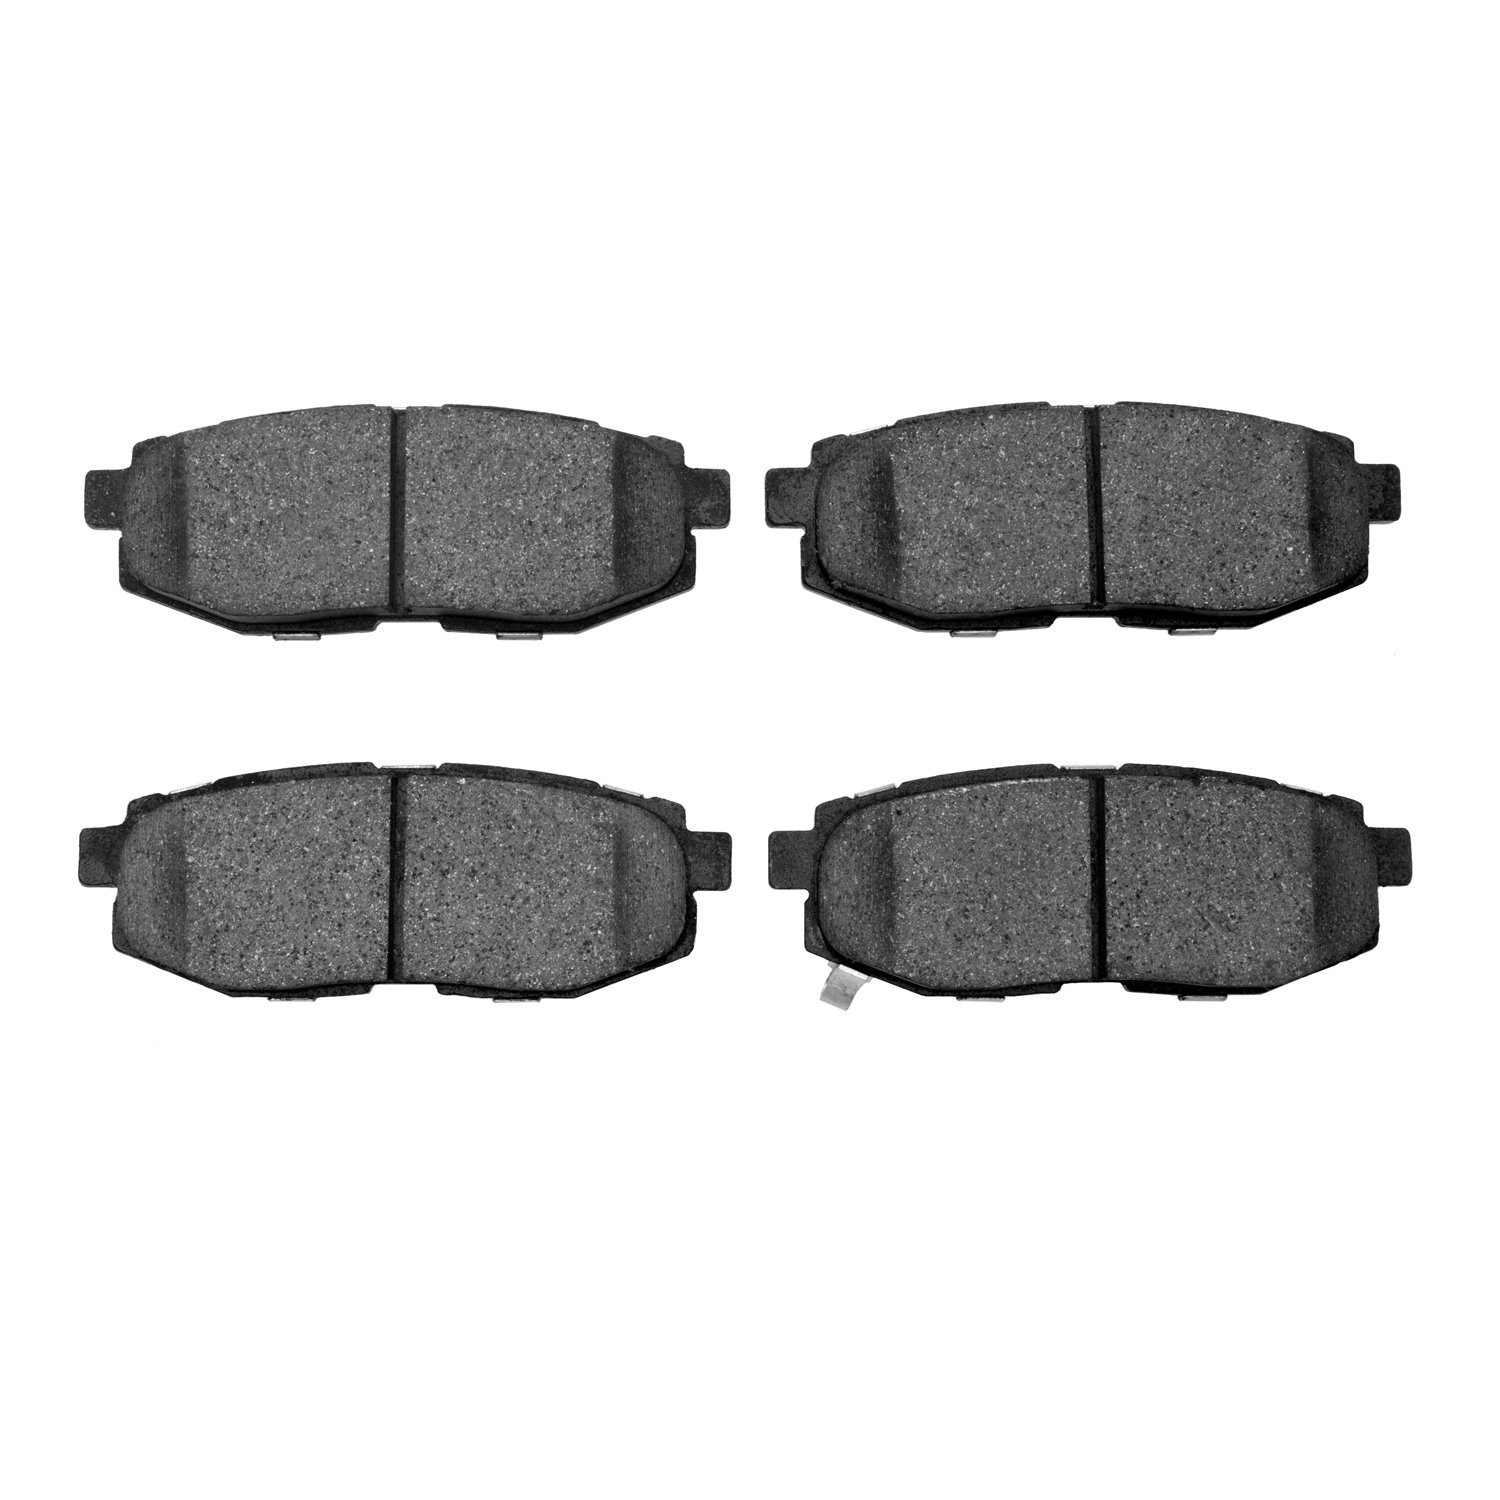 1551-1124-00 5000 Advanced Ceramic Brake Pads, Fits Select Multiple Makes/Models, Position: Rear